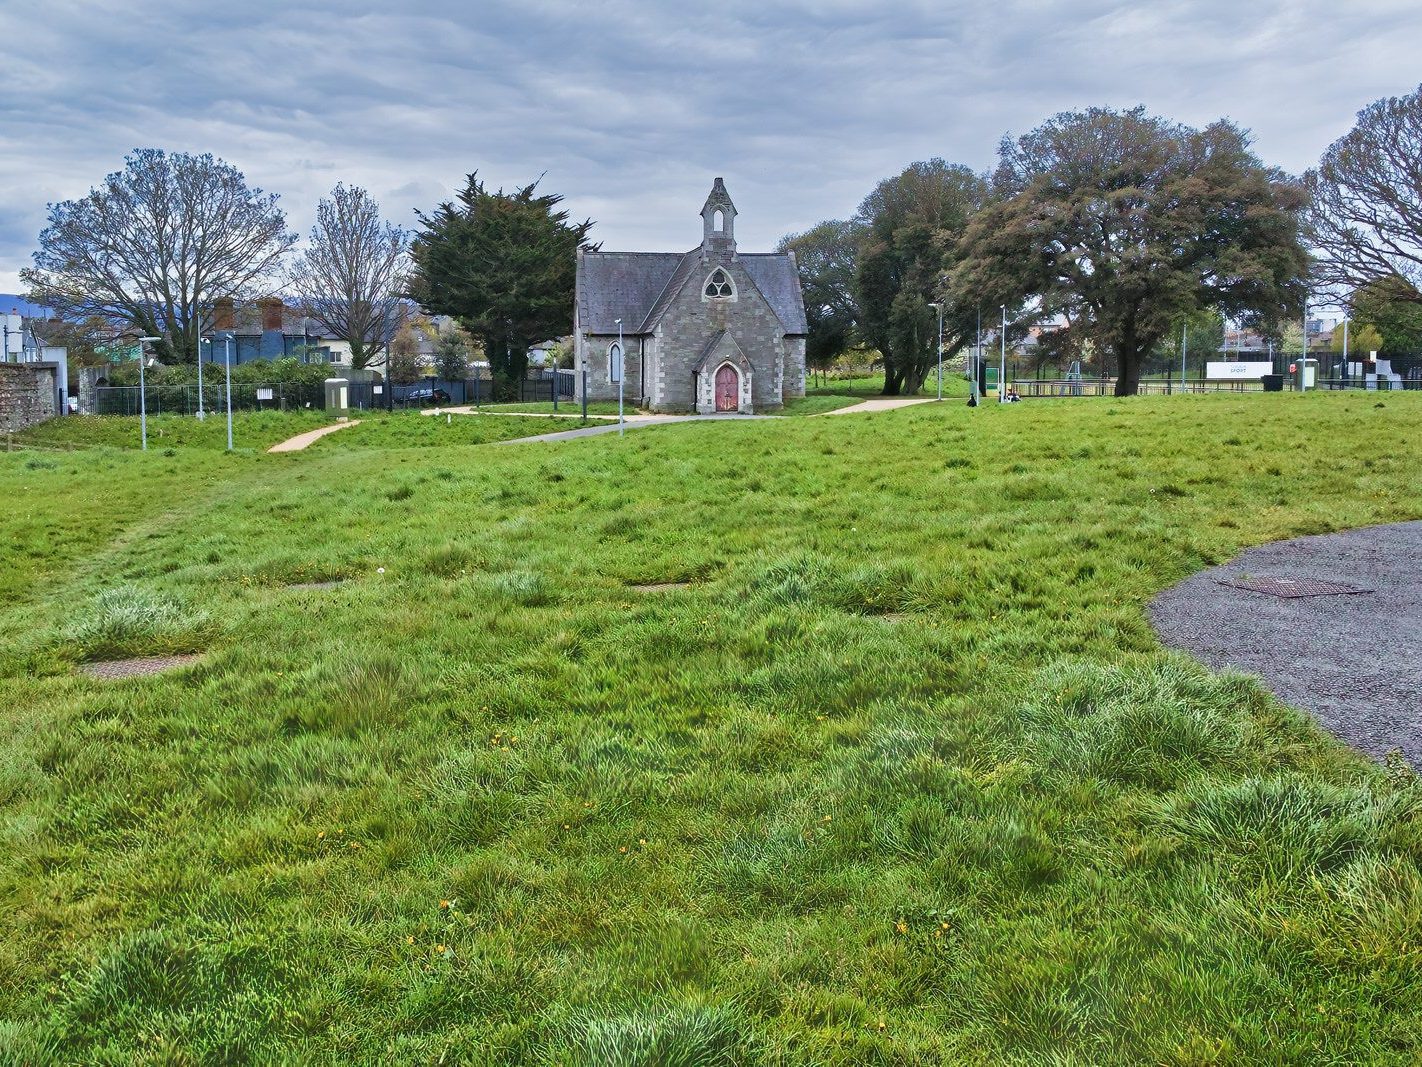 UNUSED CHURCH OF IRELAND CHURCH ON THE NEW TU GRANGEGORMAN CAMPUS 002